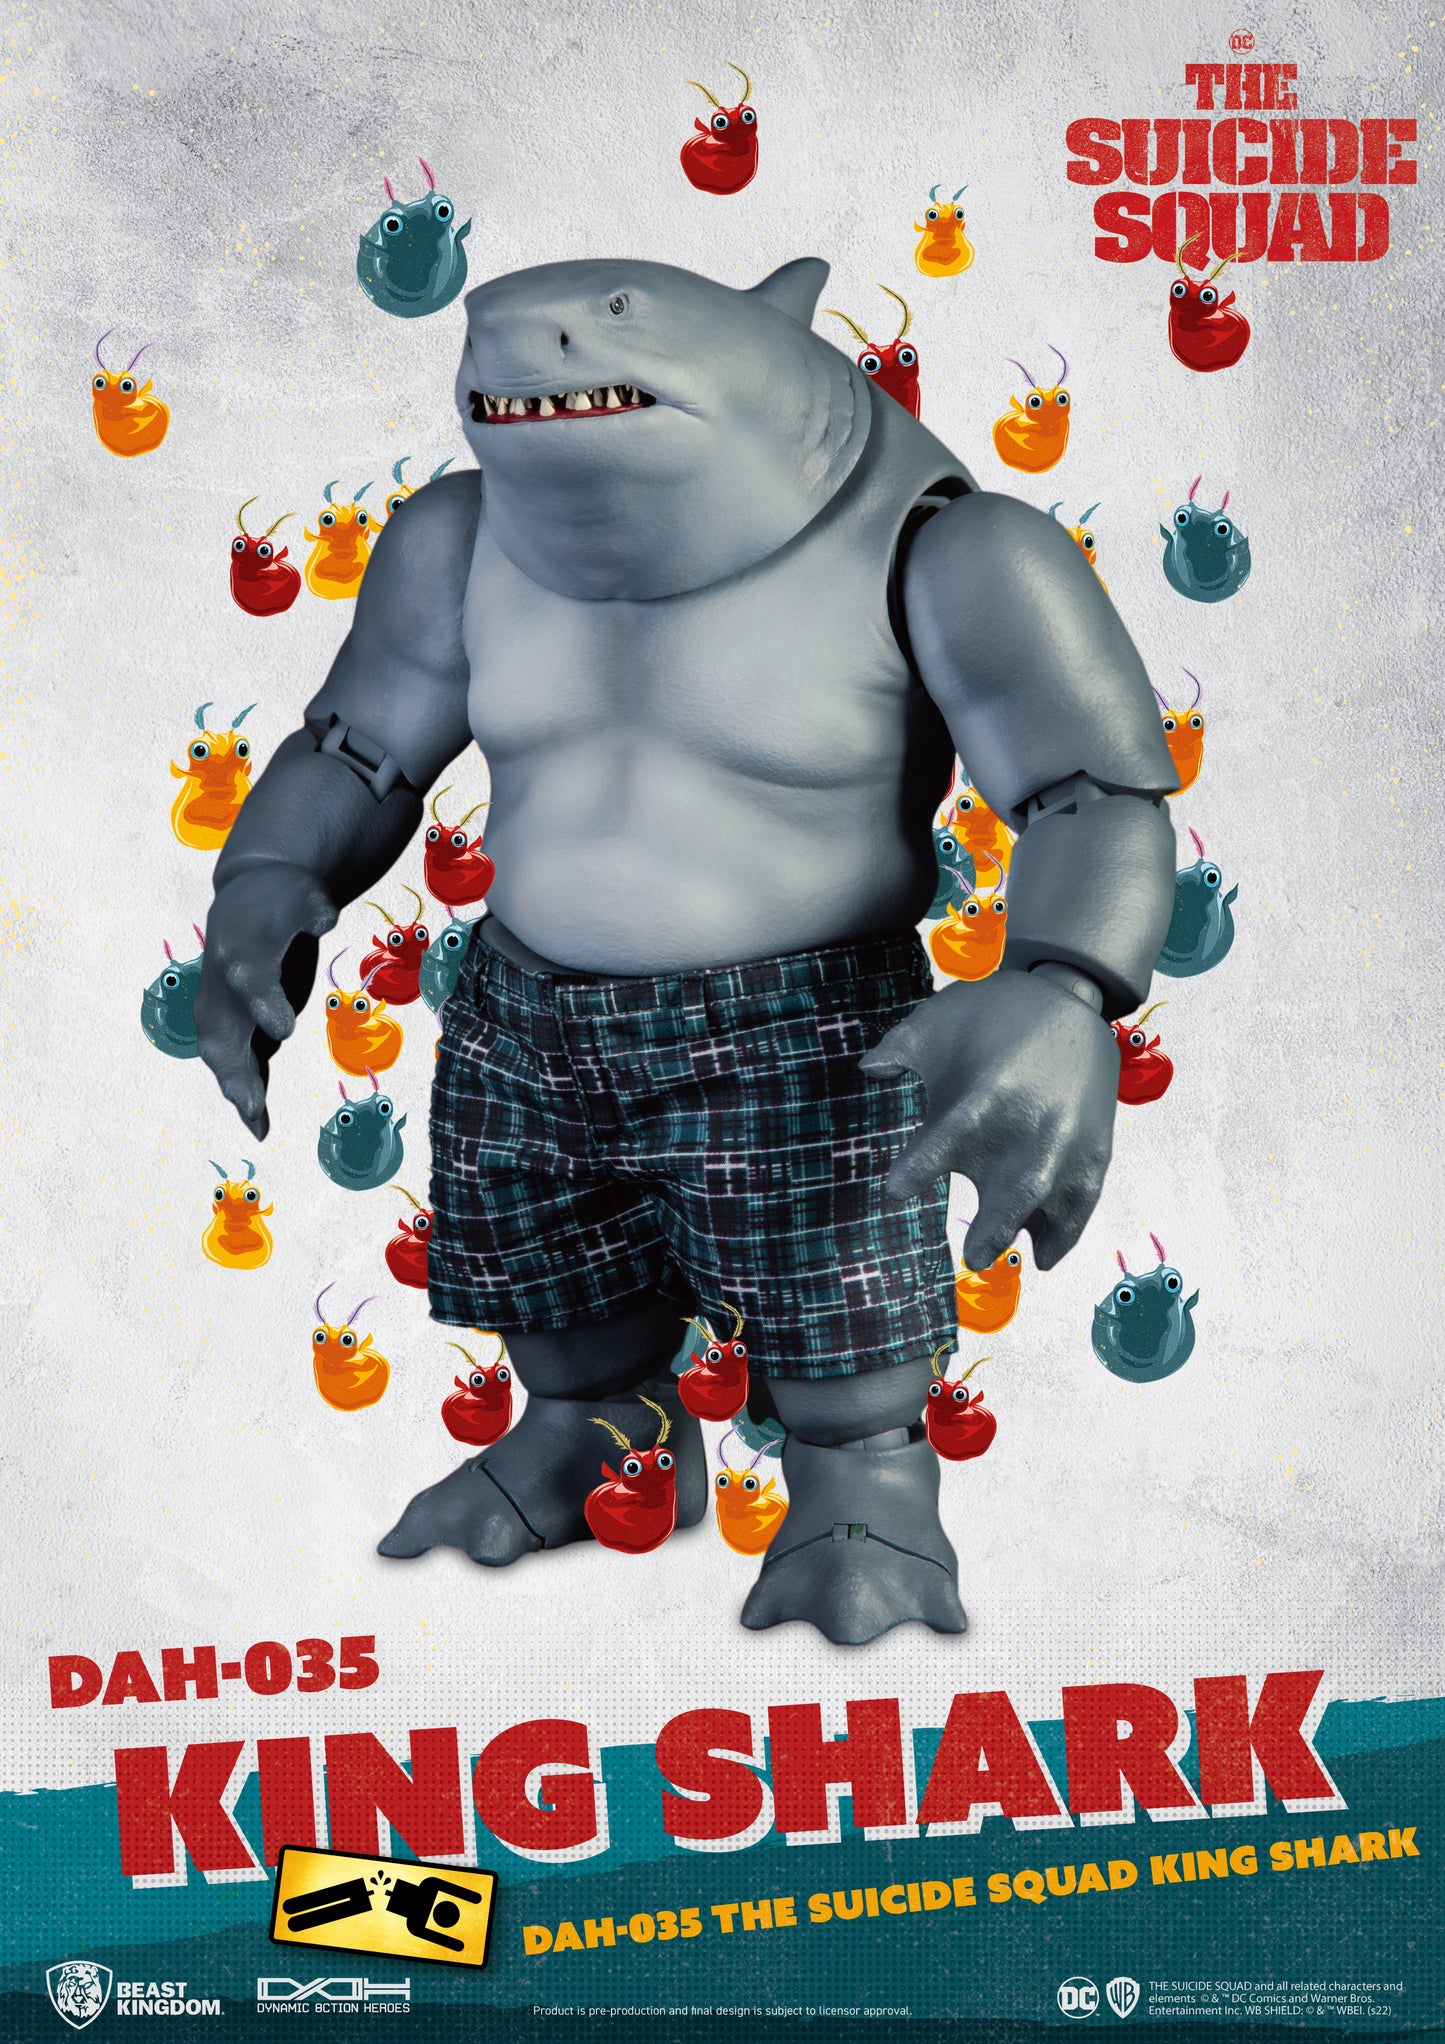 The Suicide Squad King Shark Nanaue(Dynamic 8ction Hero) DAH-035